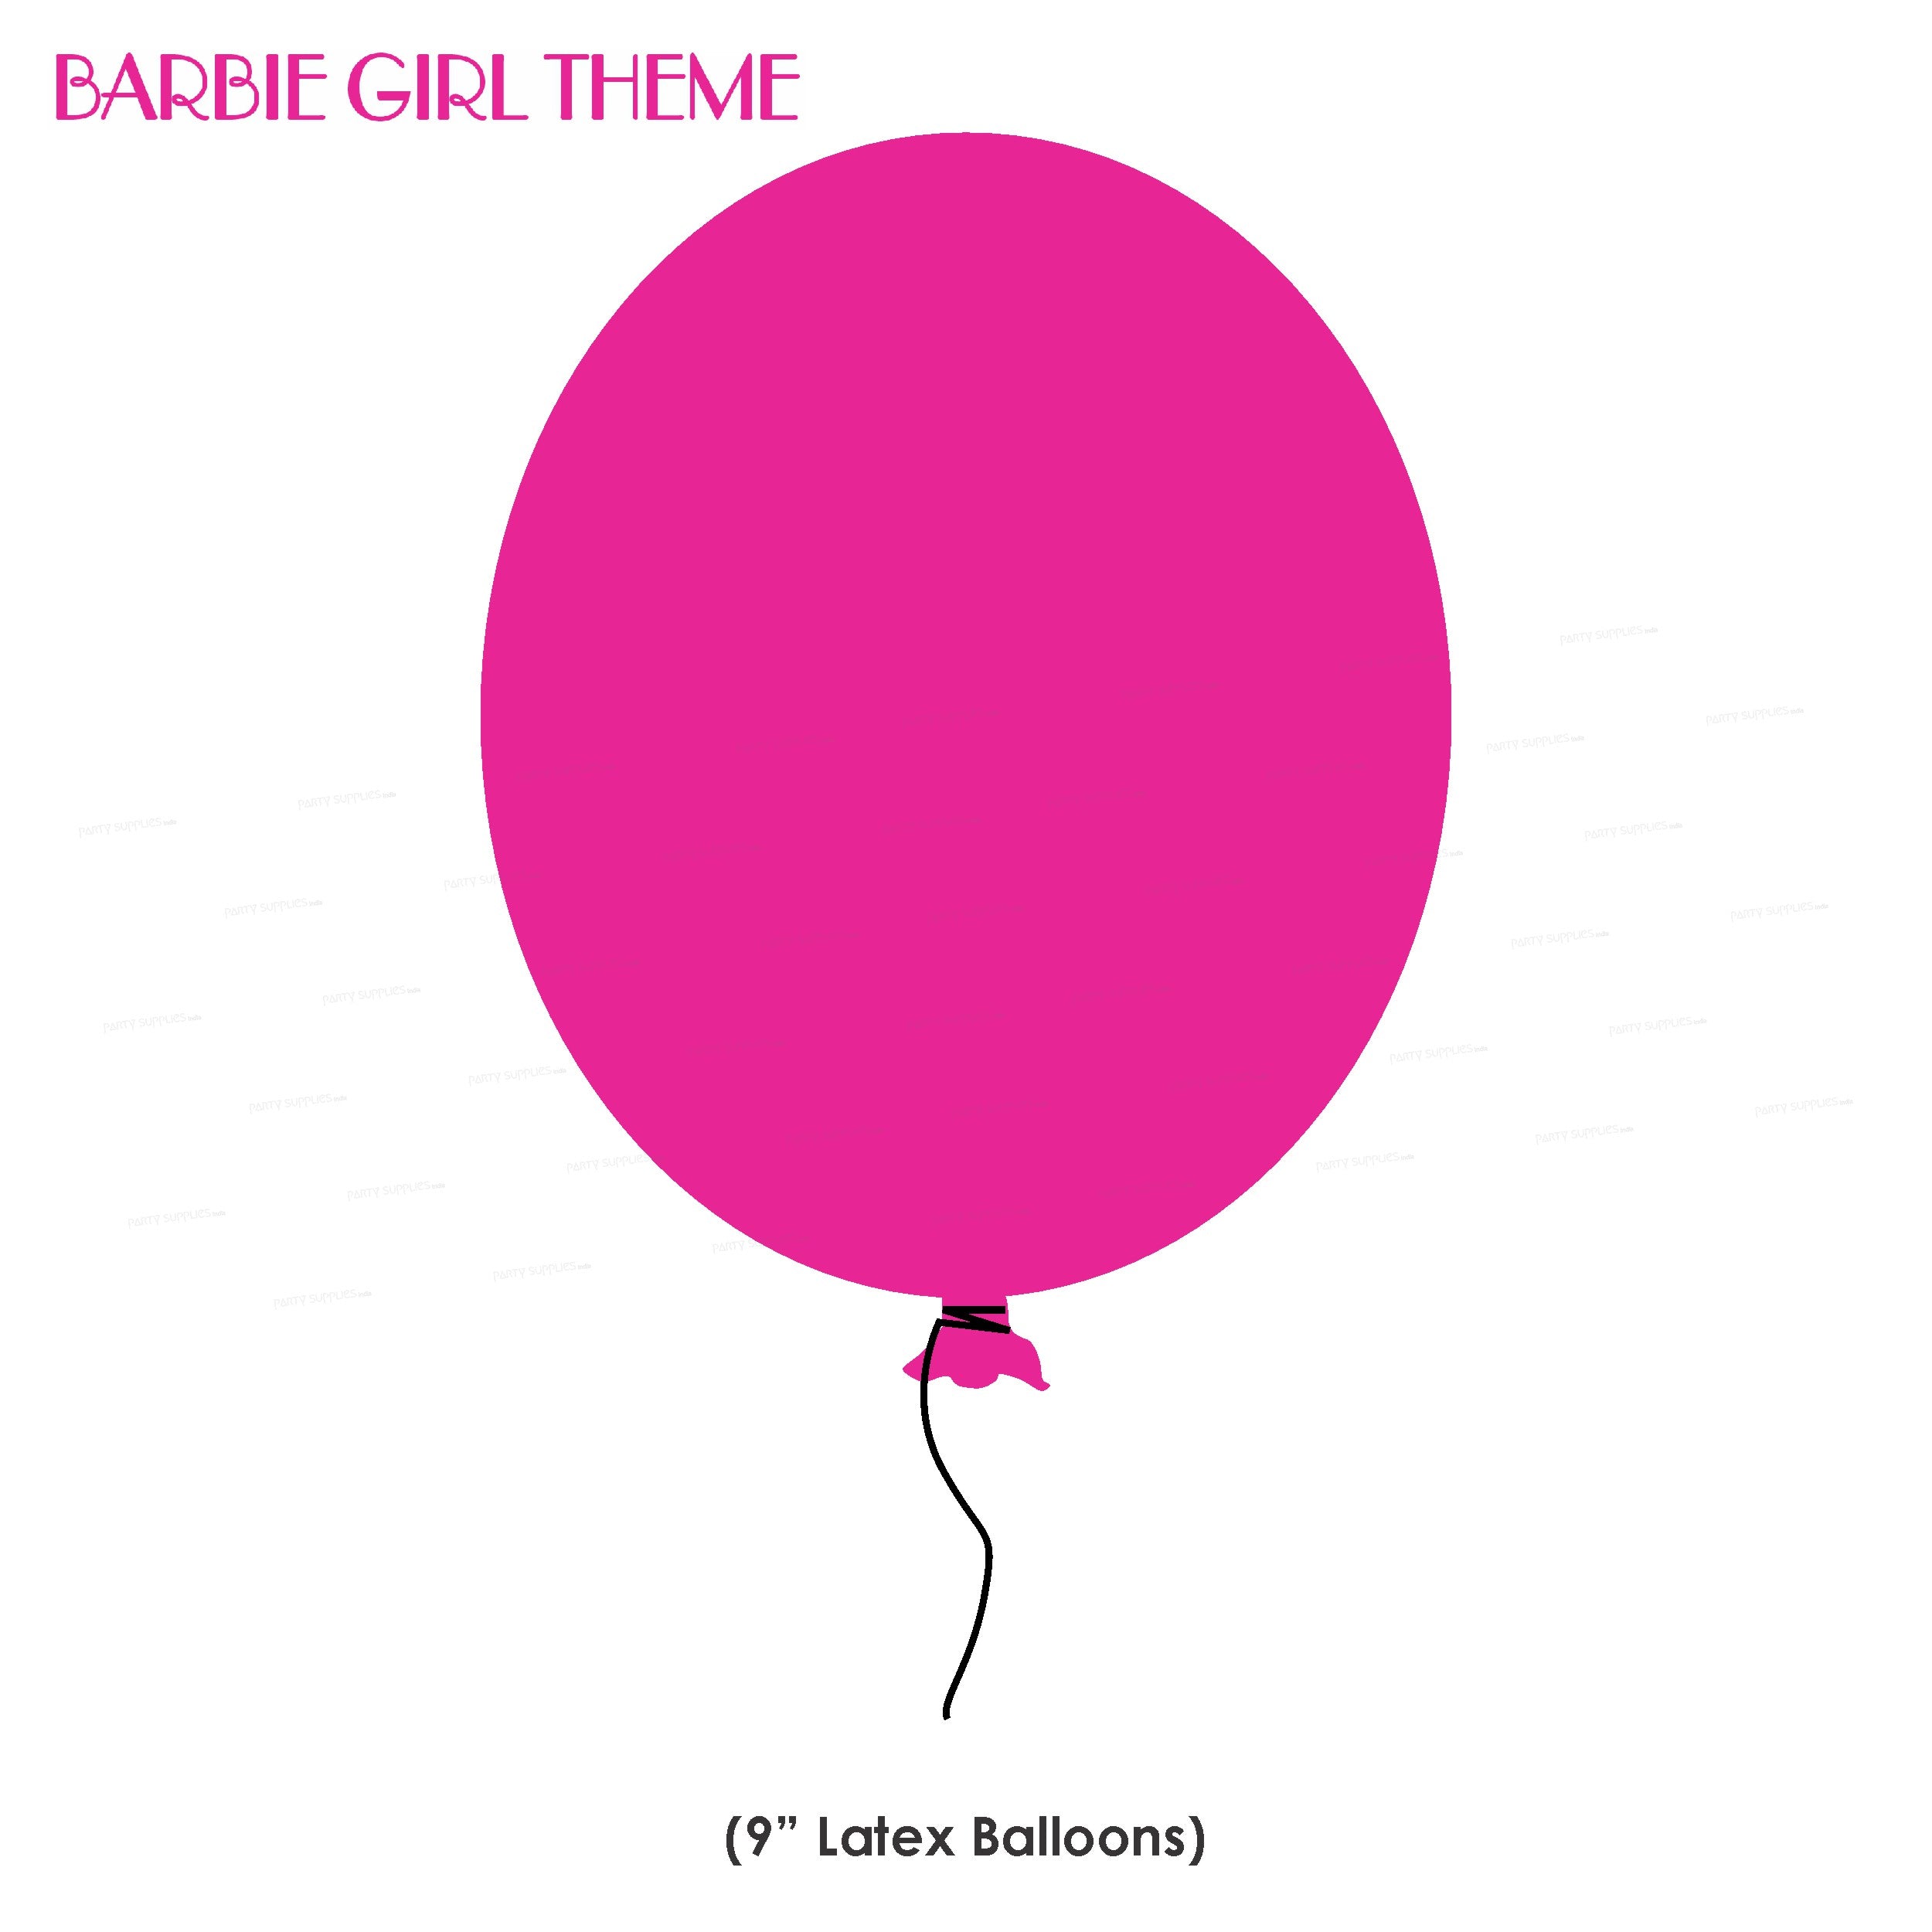 PSI Barbie Theme Colour 60 Pcs. Balloons